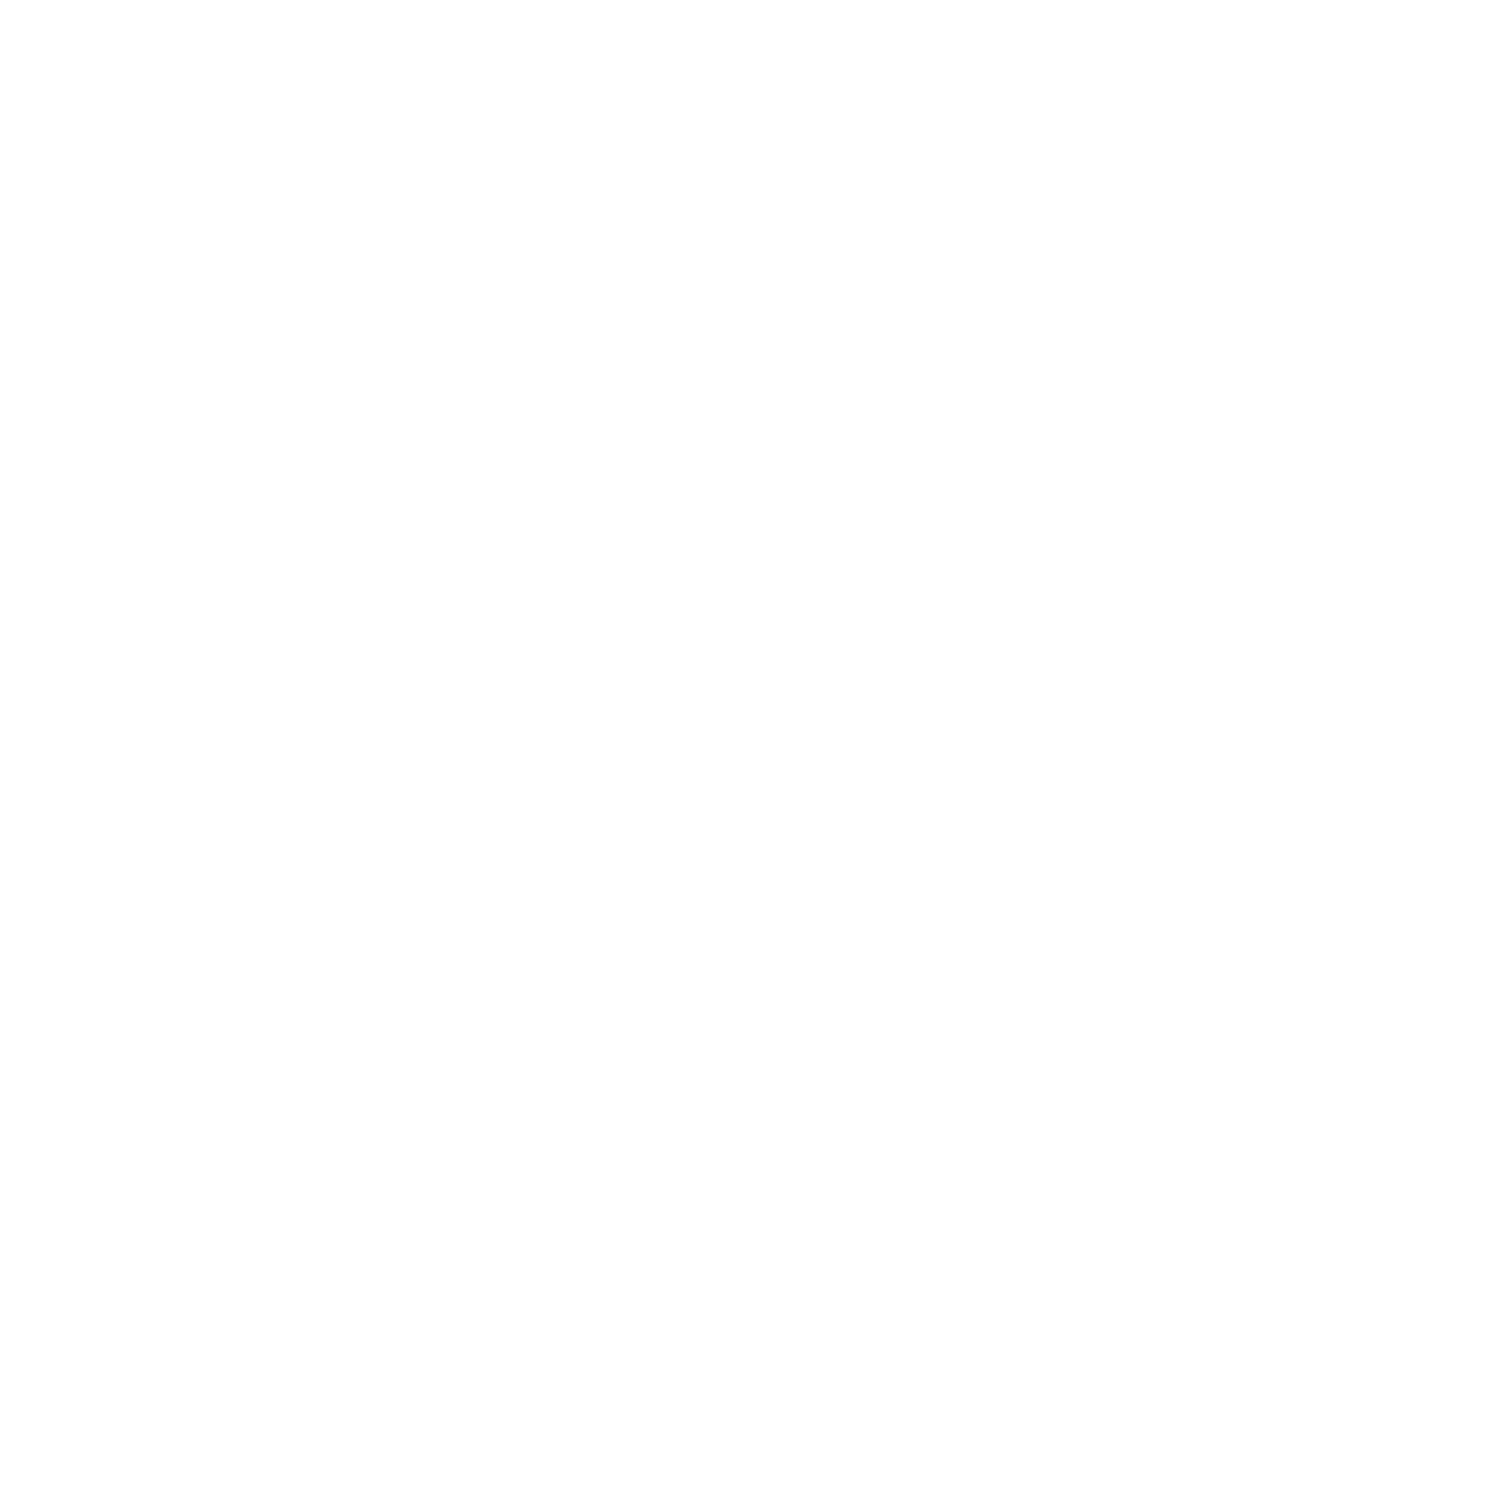 Conejo Valley Spotlight